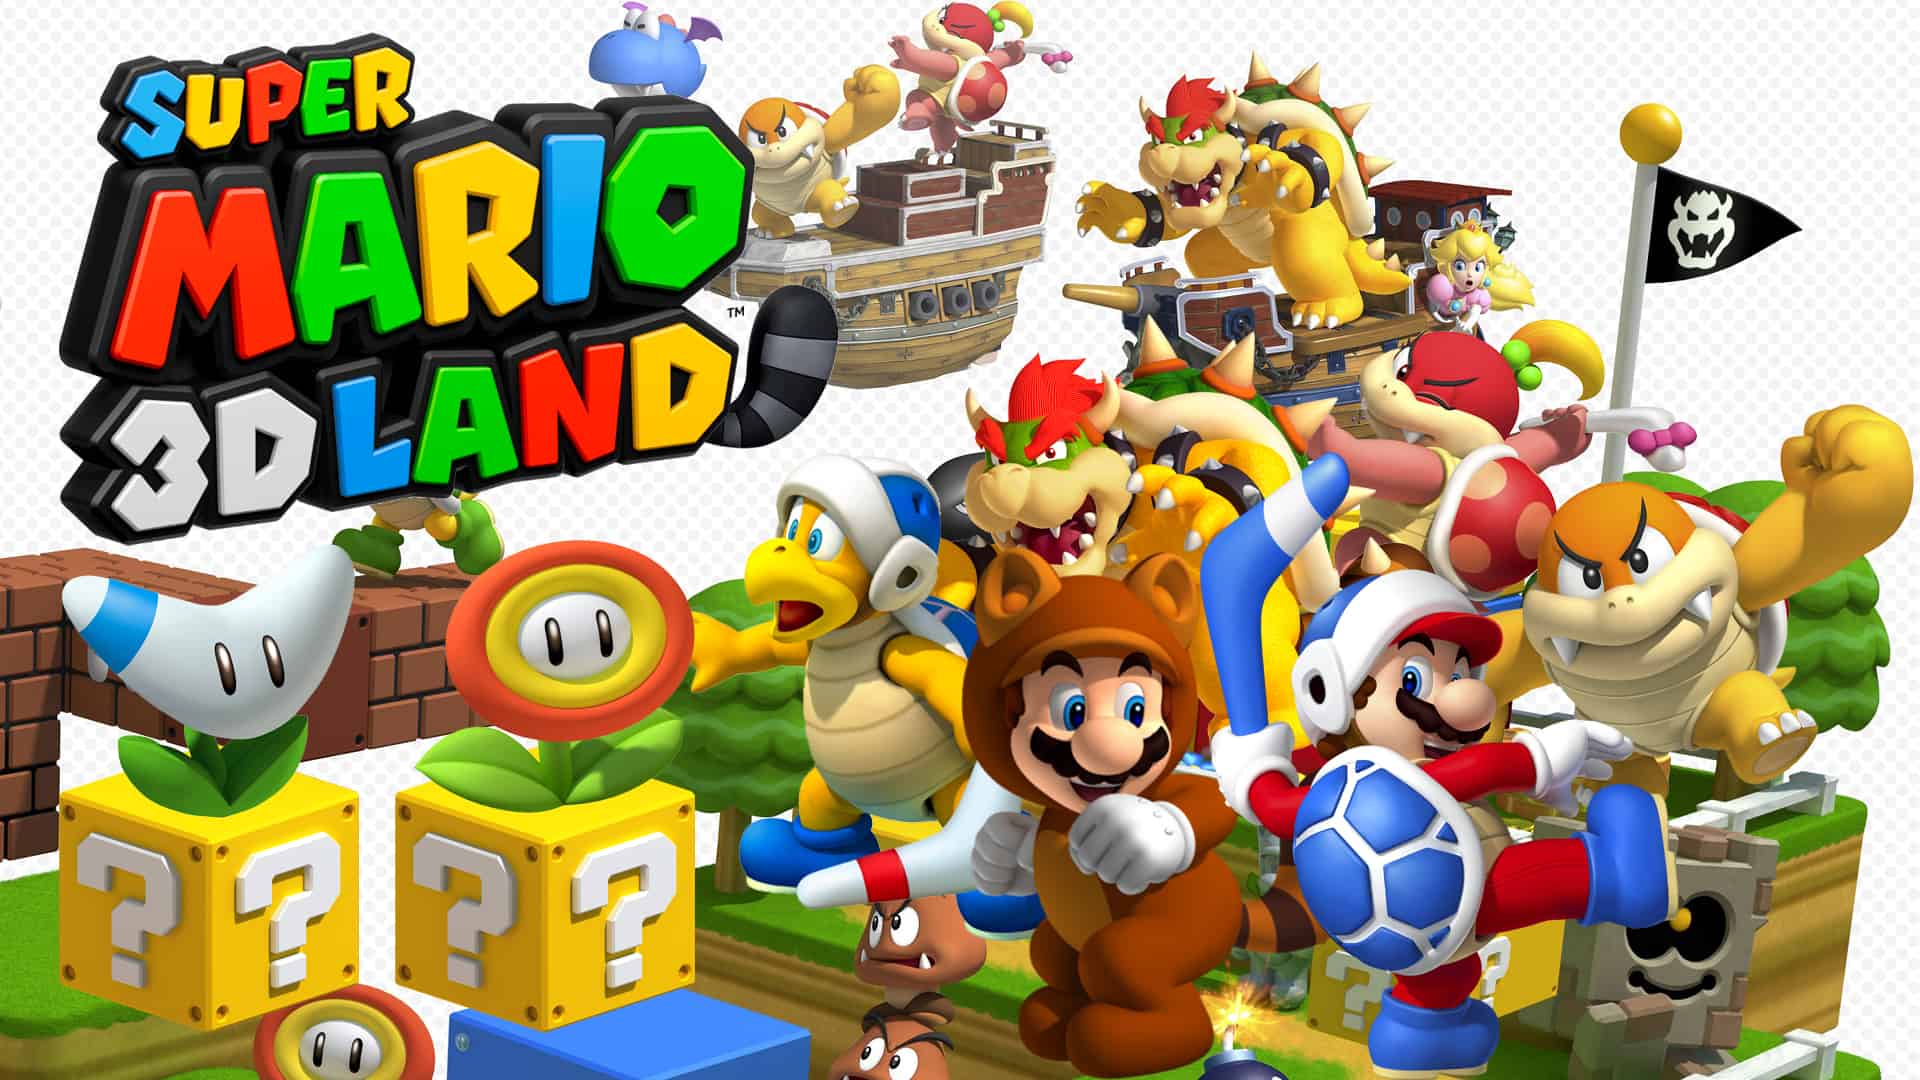 Best Super Mario Games - 3D Land